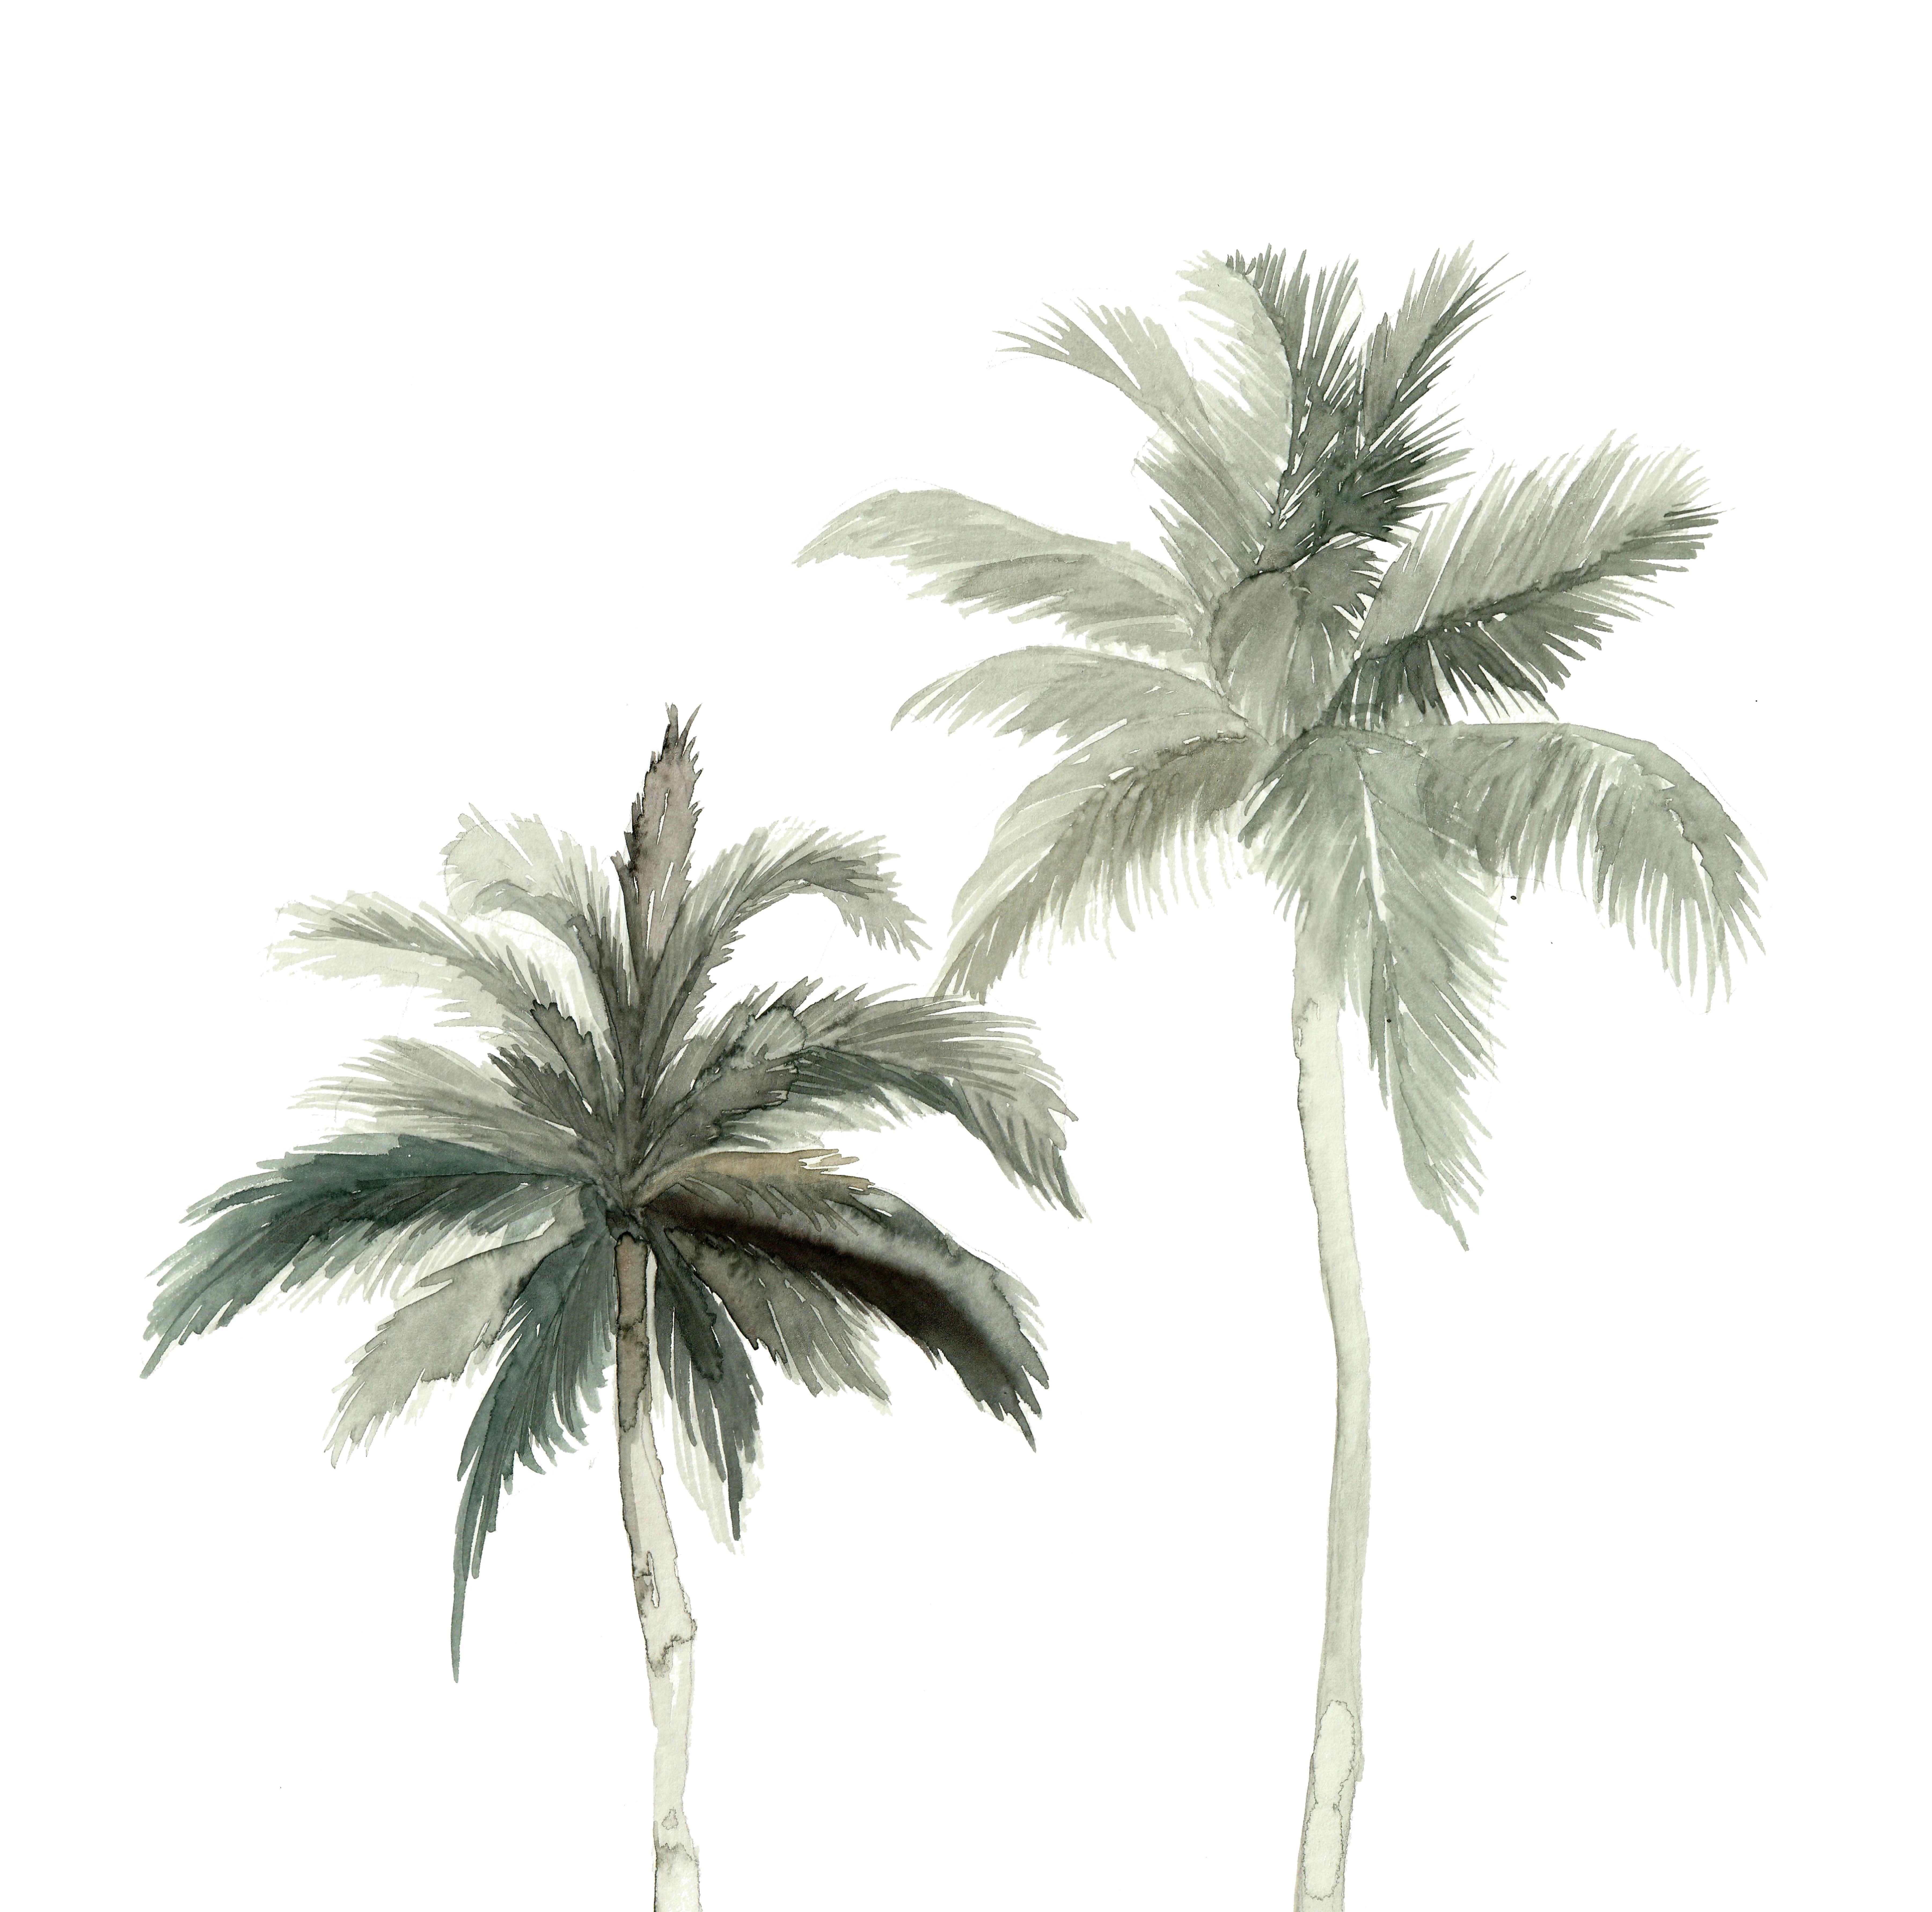 012417200712652-botanical-illustration---palmtrees.jpg